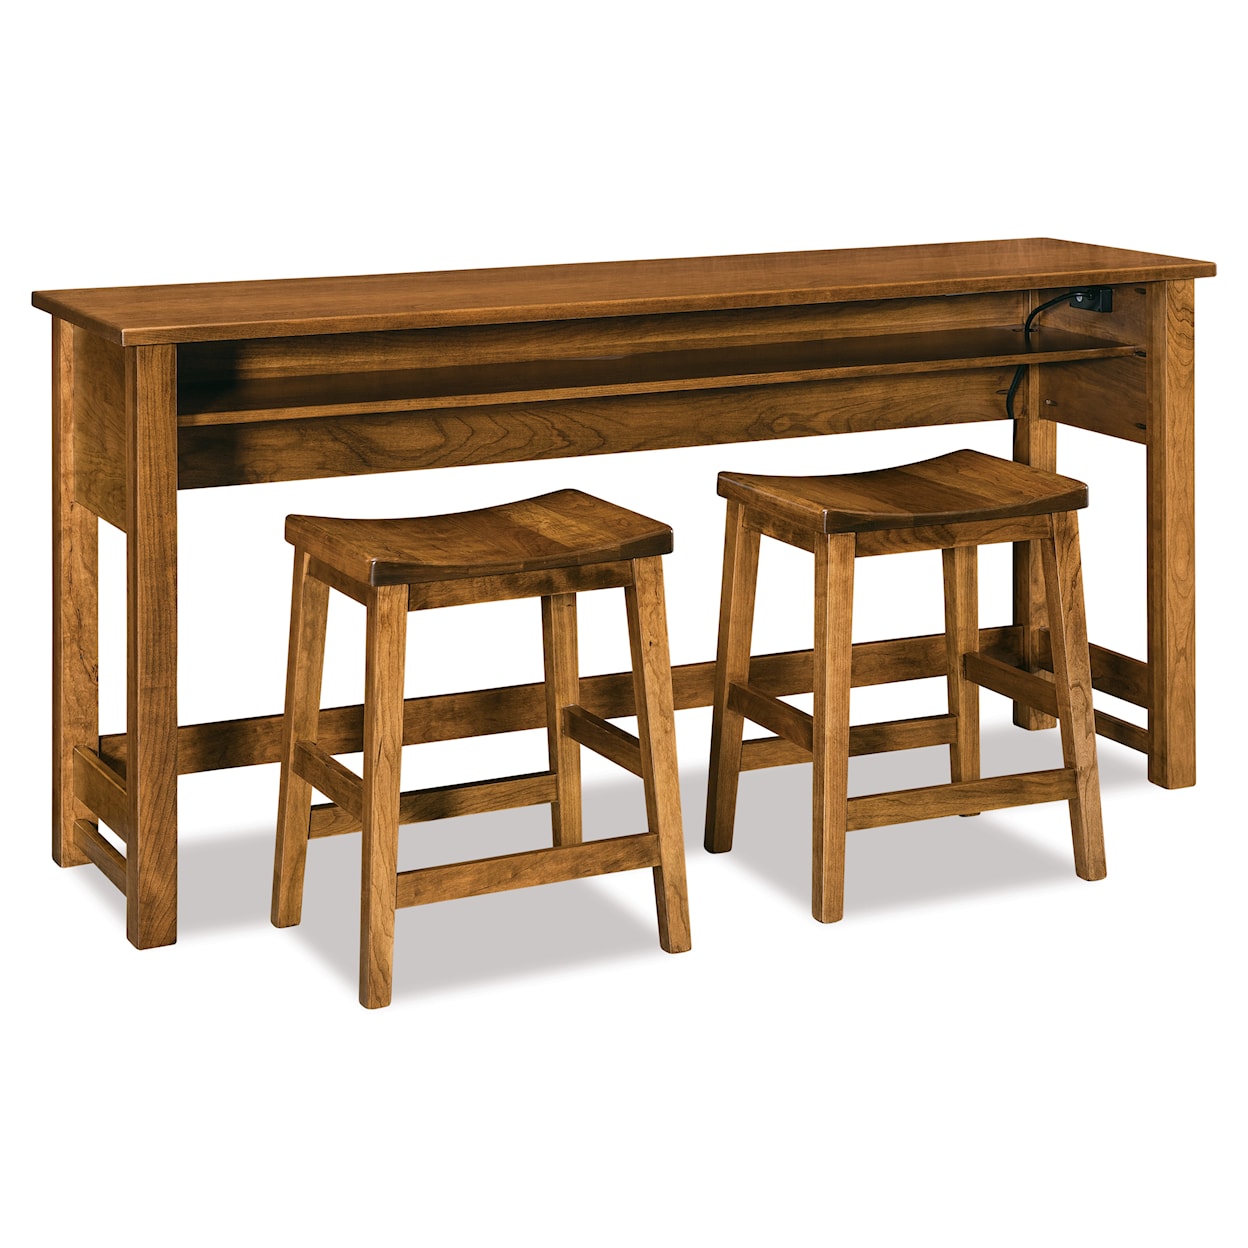 Archbold Furniture Bob Timberlake Counter-Height Saddle Stool